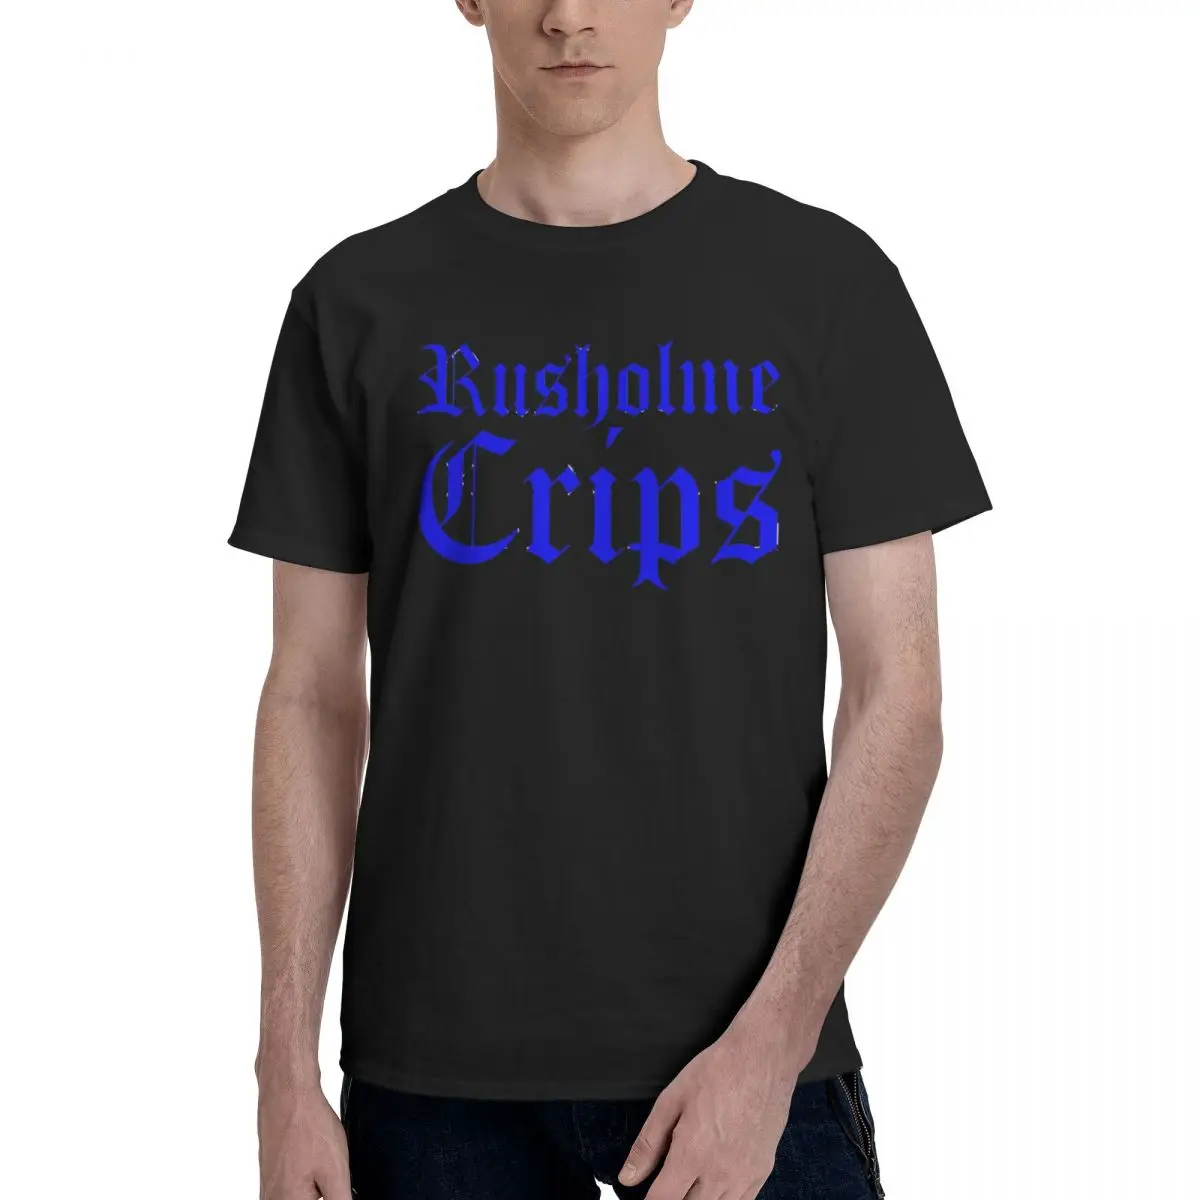 

Man Rusholme Crips Sticker T14 home Black Men's Basic Short Sleeve T-Shirt Novelty Tshirt European size